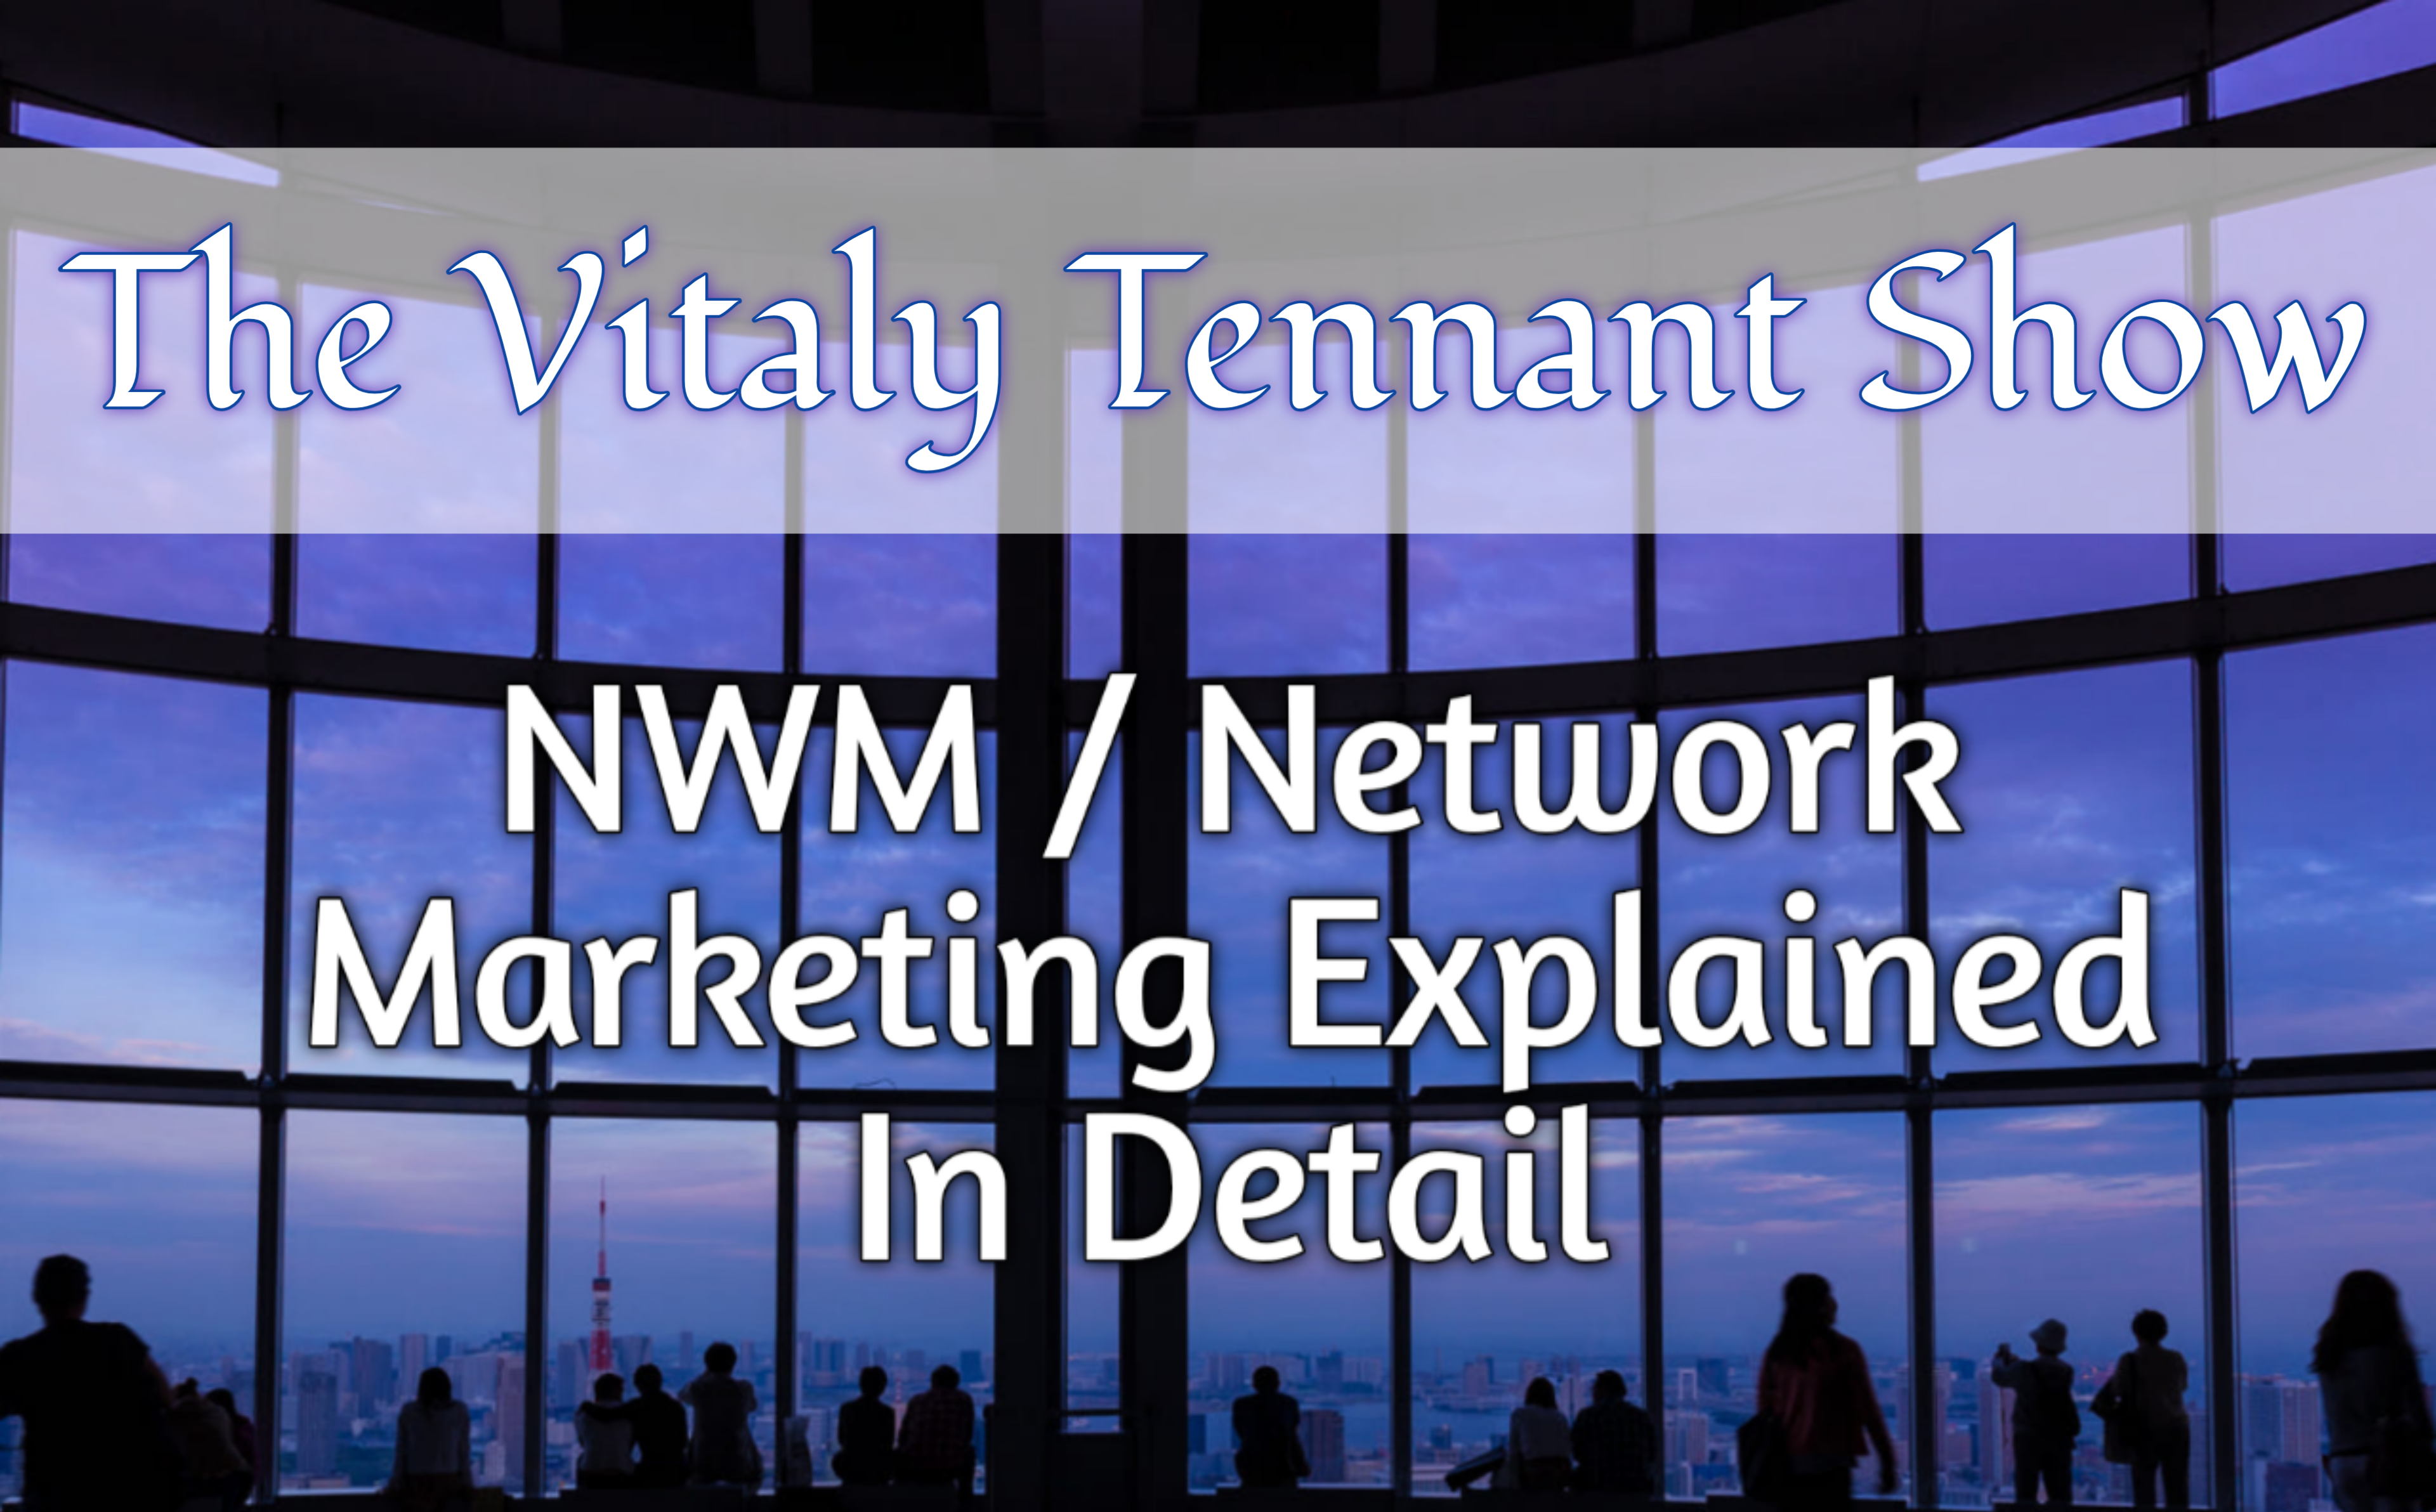 the vitaly tennant show nwm network marketing explained vitalytennant.com vvt